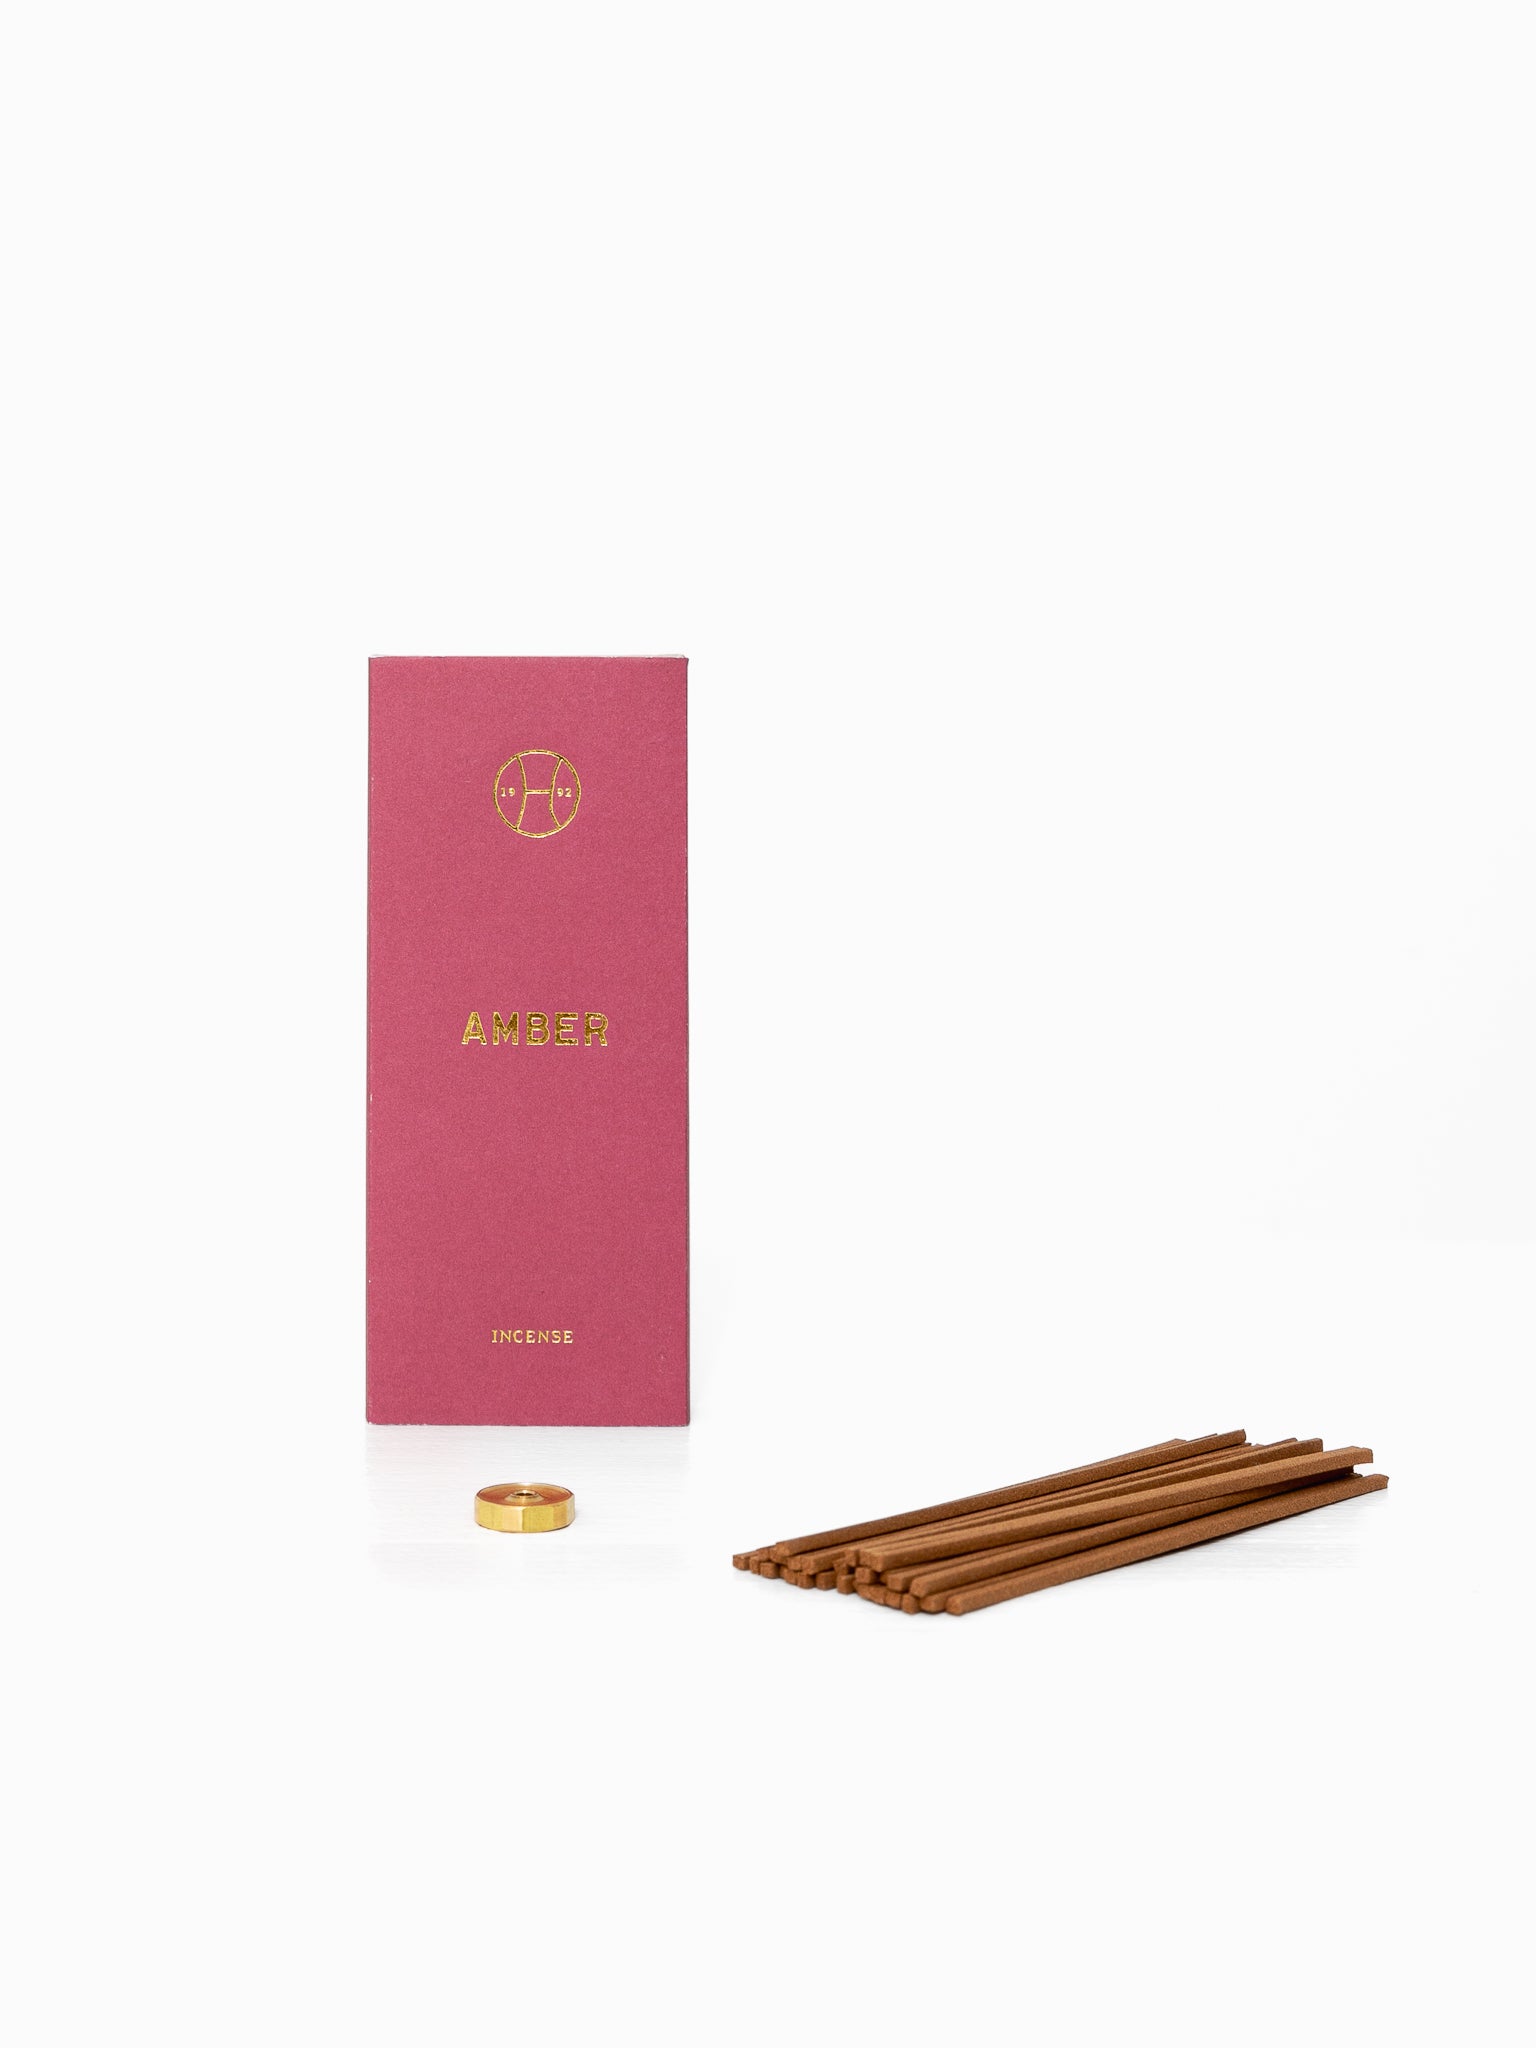 Perfumer H Amber Incense - Worthwhile